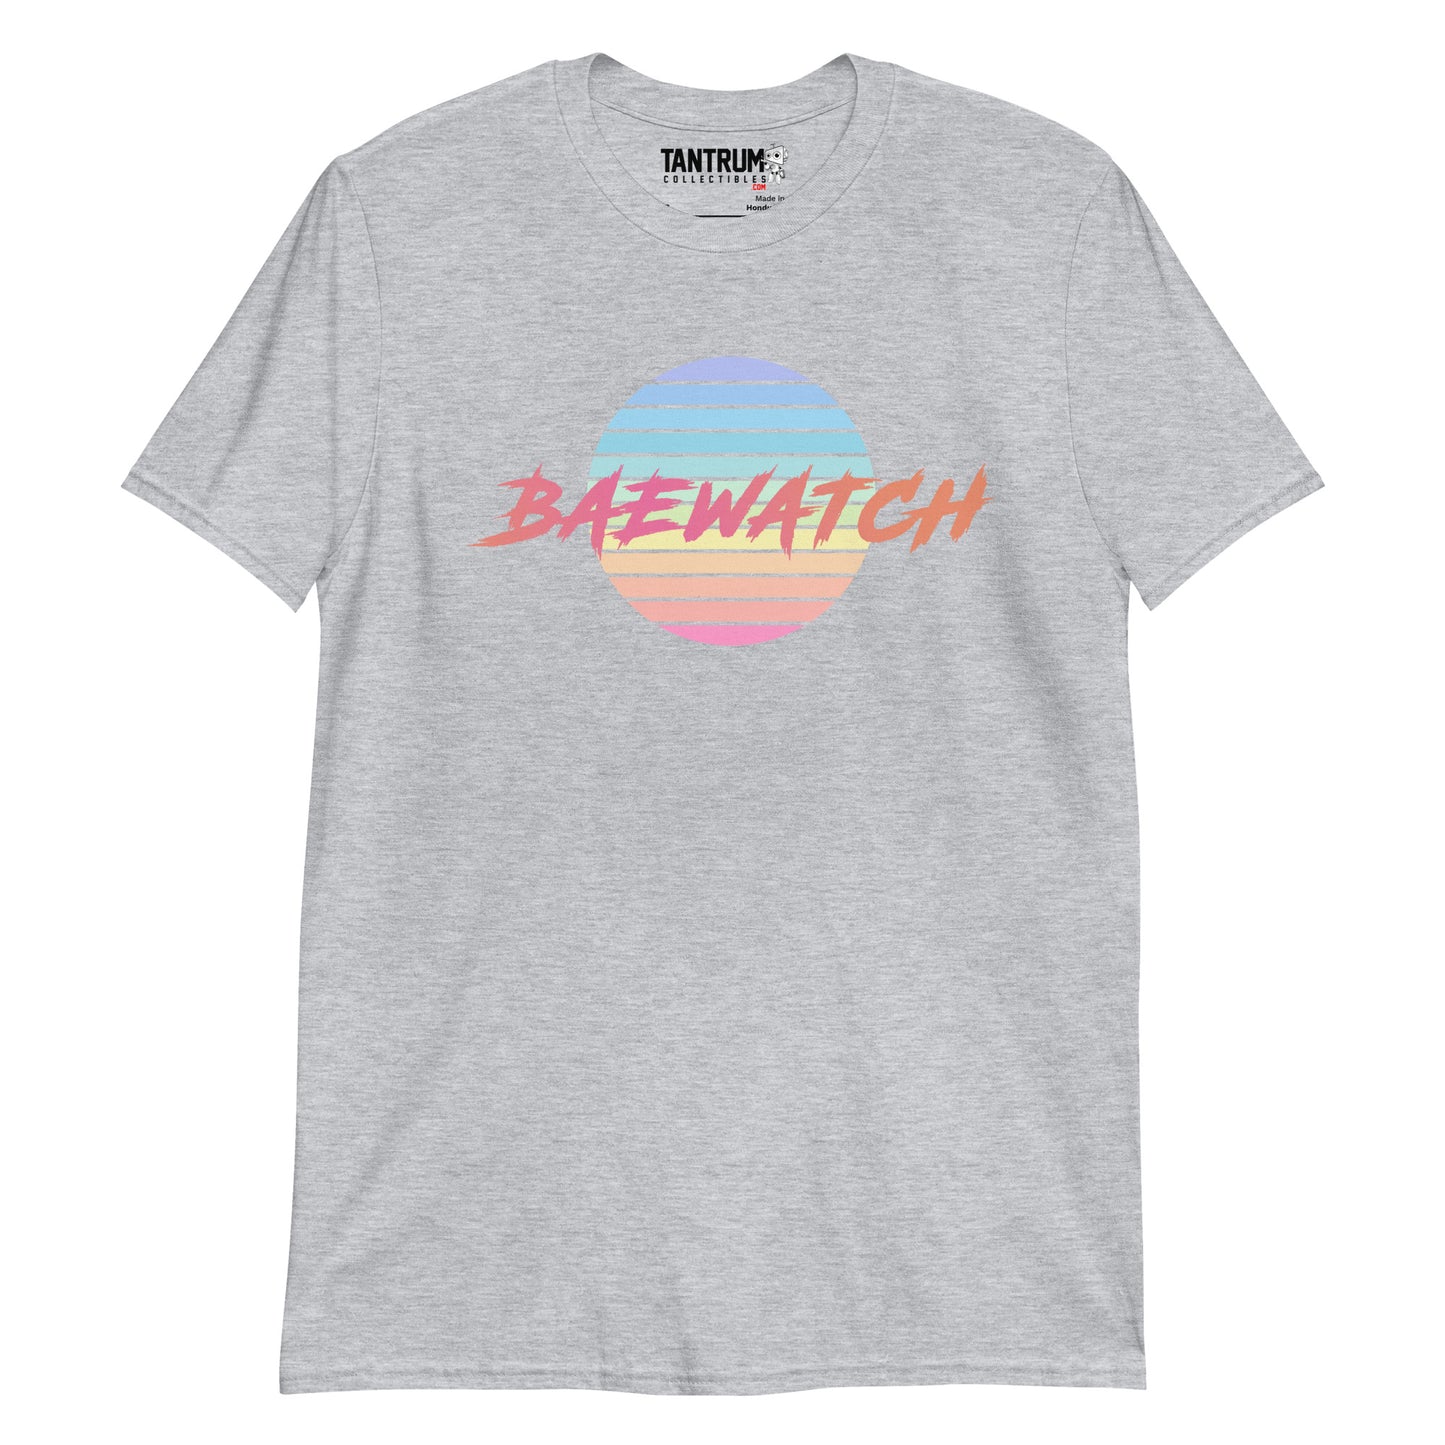 Baeginning - Unisex T-Shirt - Baewatch Sunset